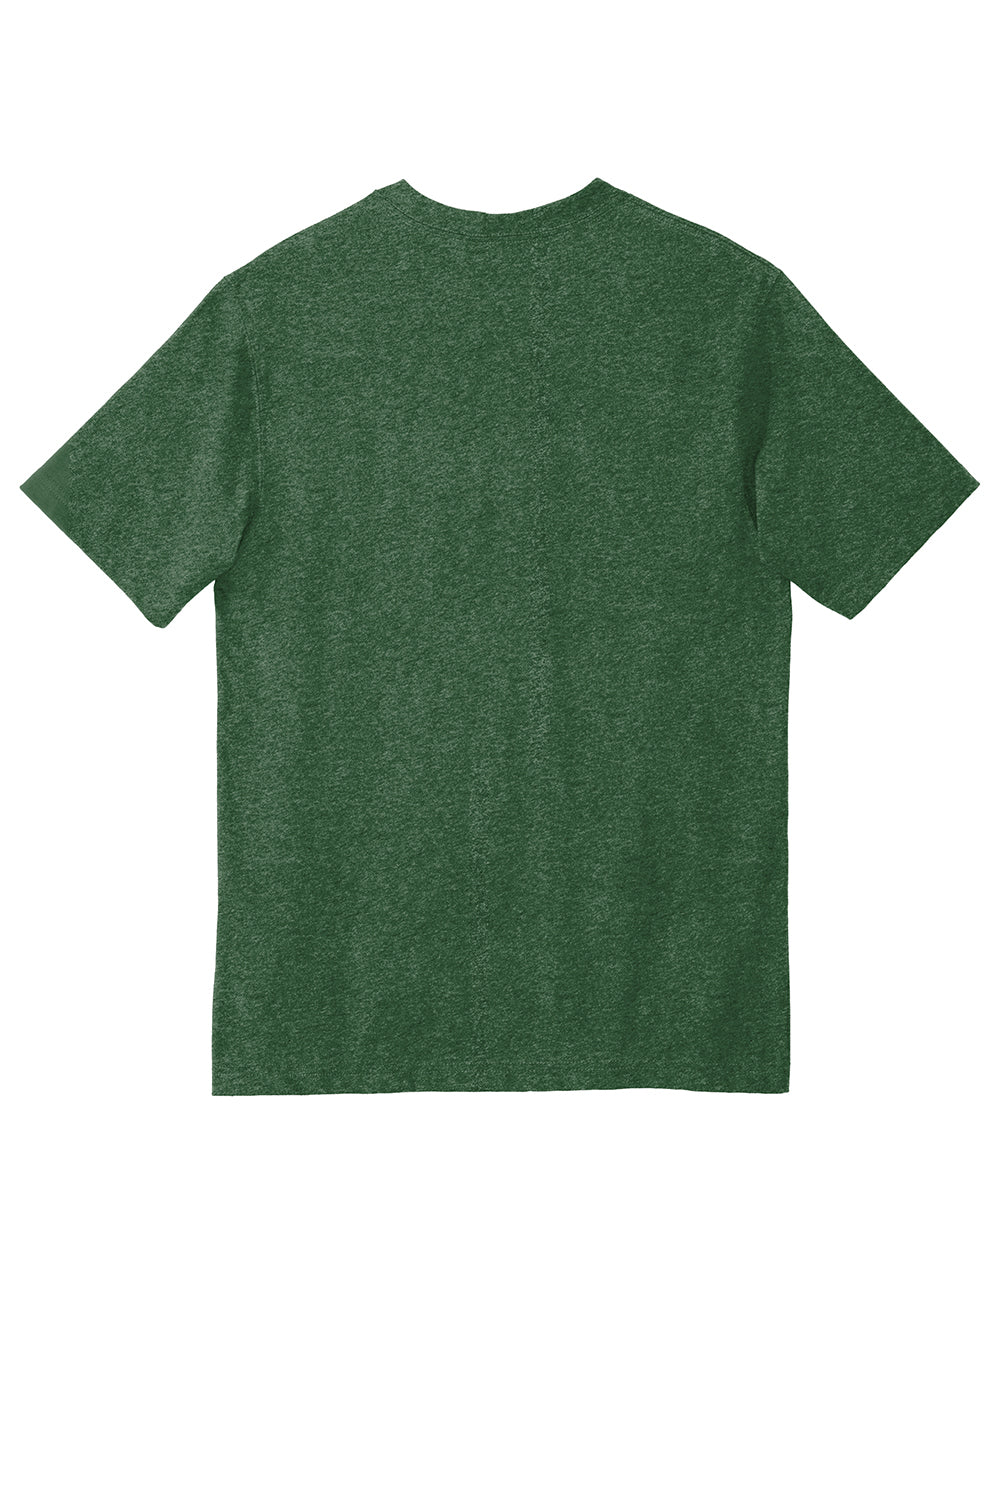 Carhartt CTK87/CTTK87 Mens Workwear Short Sleeve Crewneck T-Shirt w/ Pocket Heather North Woods Green Flat Back